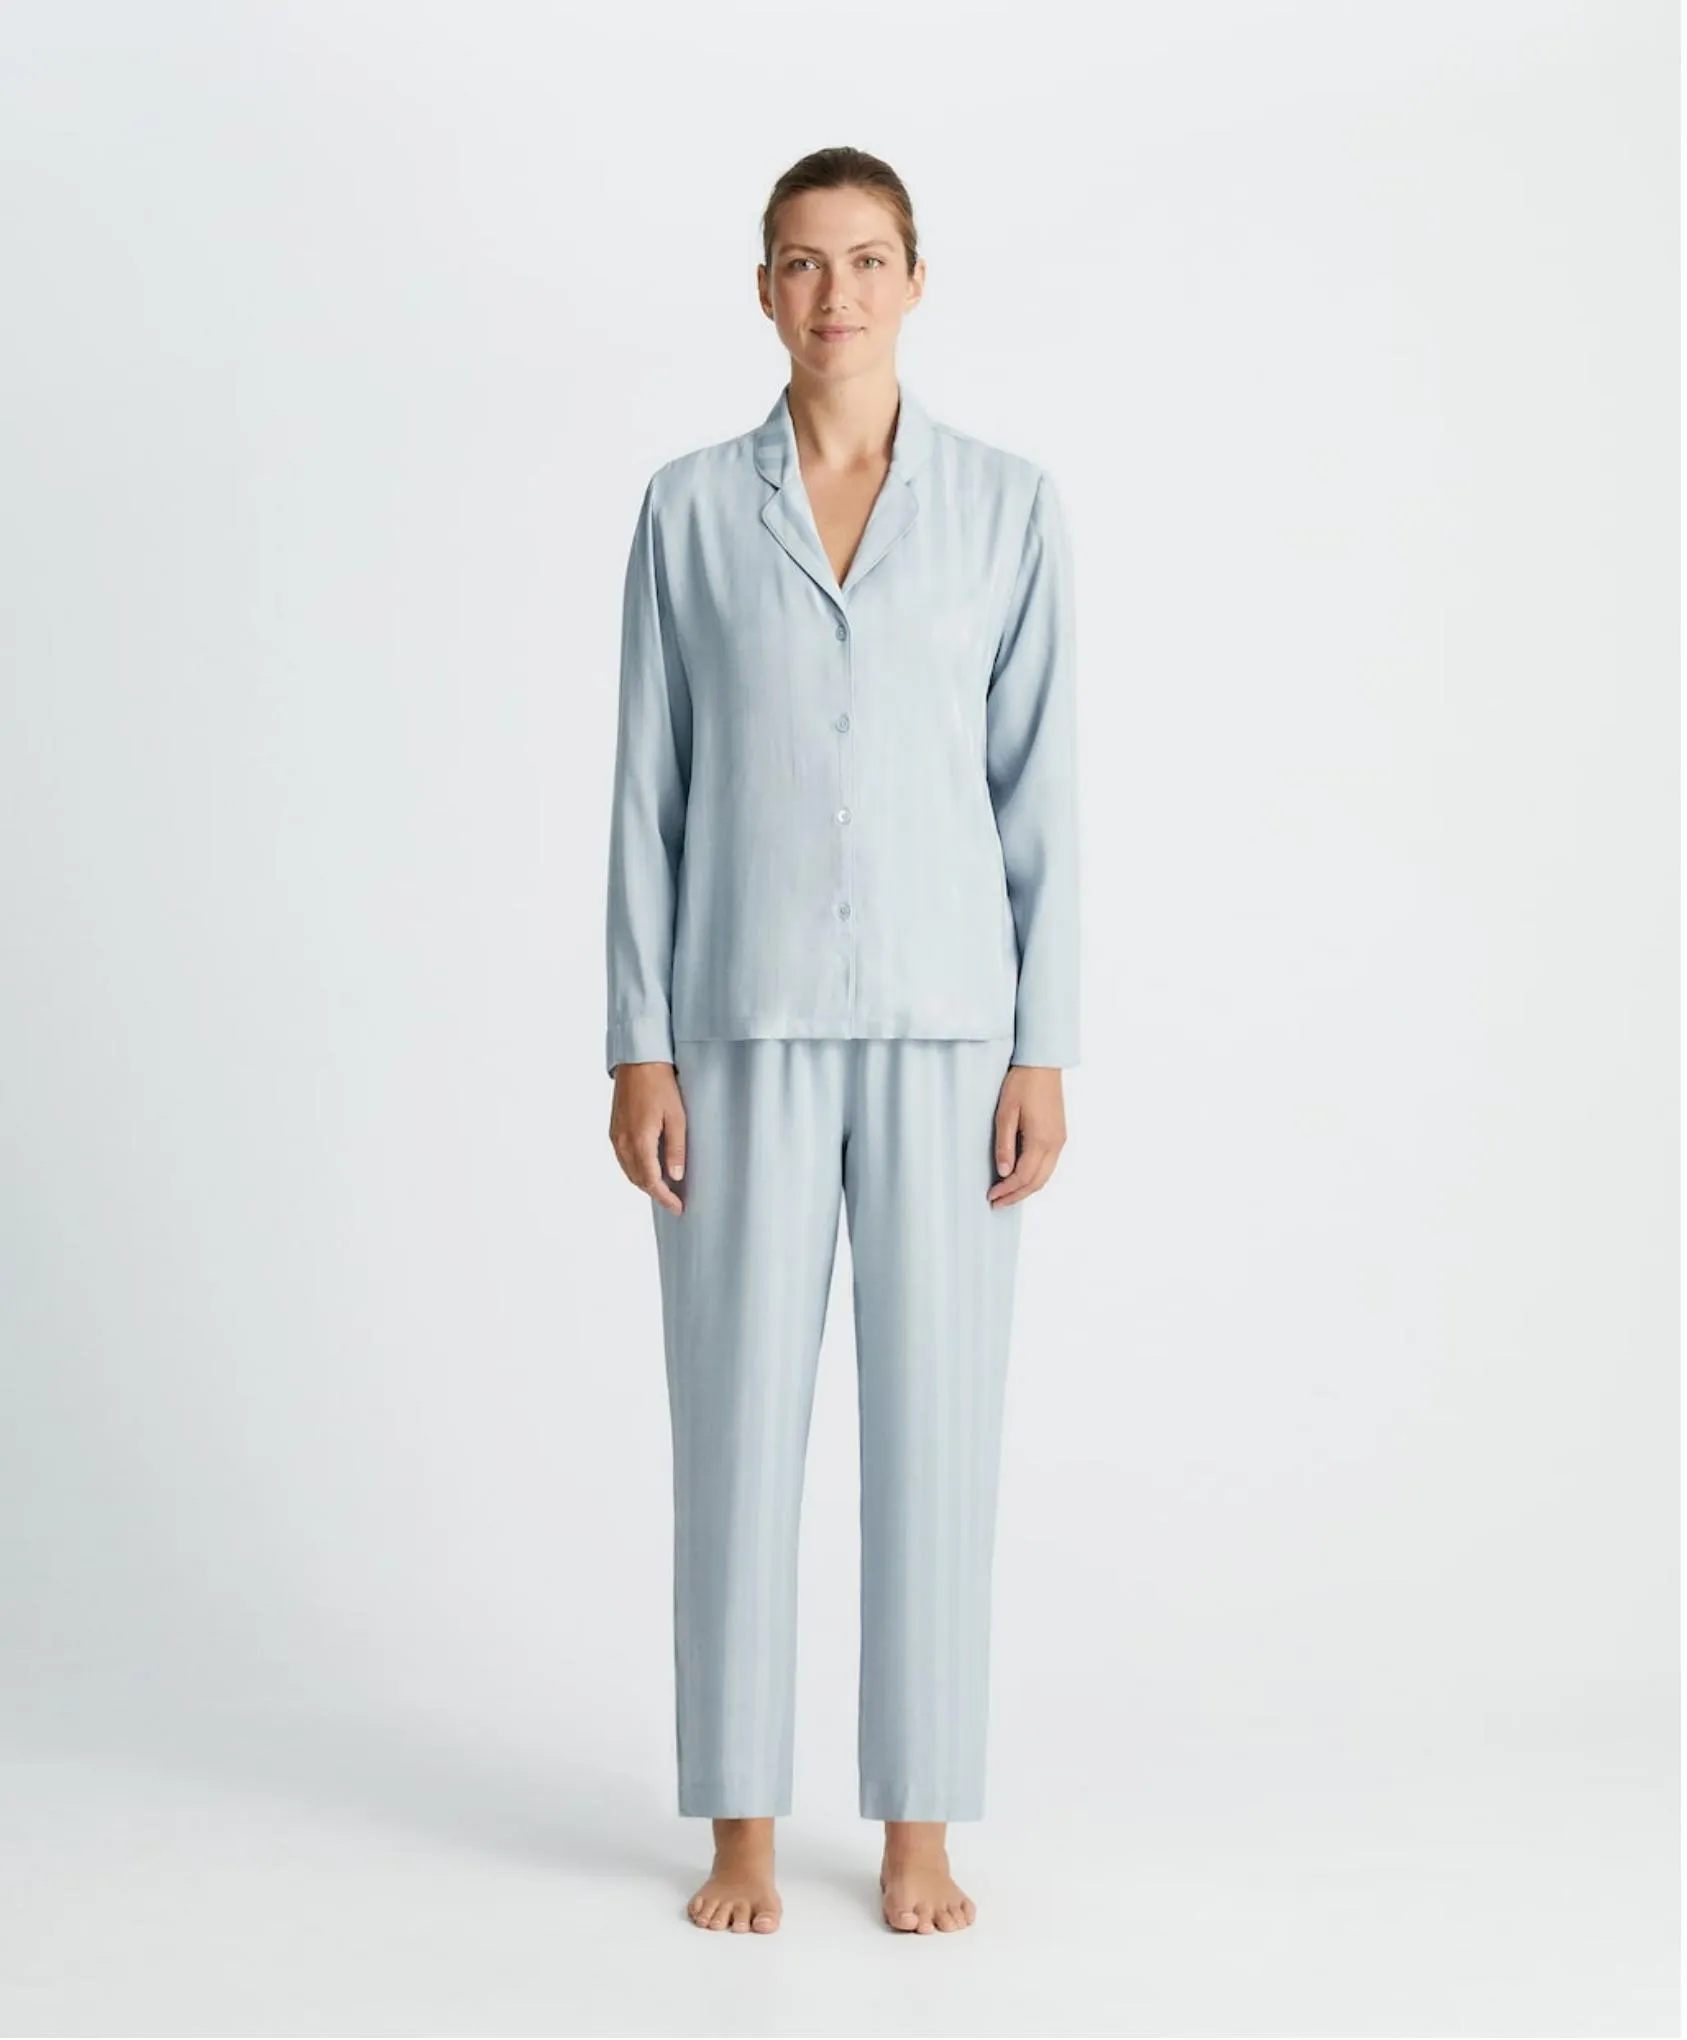 Catalogue Pyjamas et Homewear, page 00017